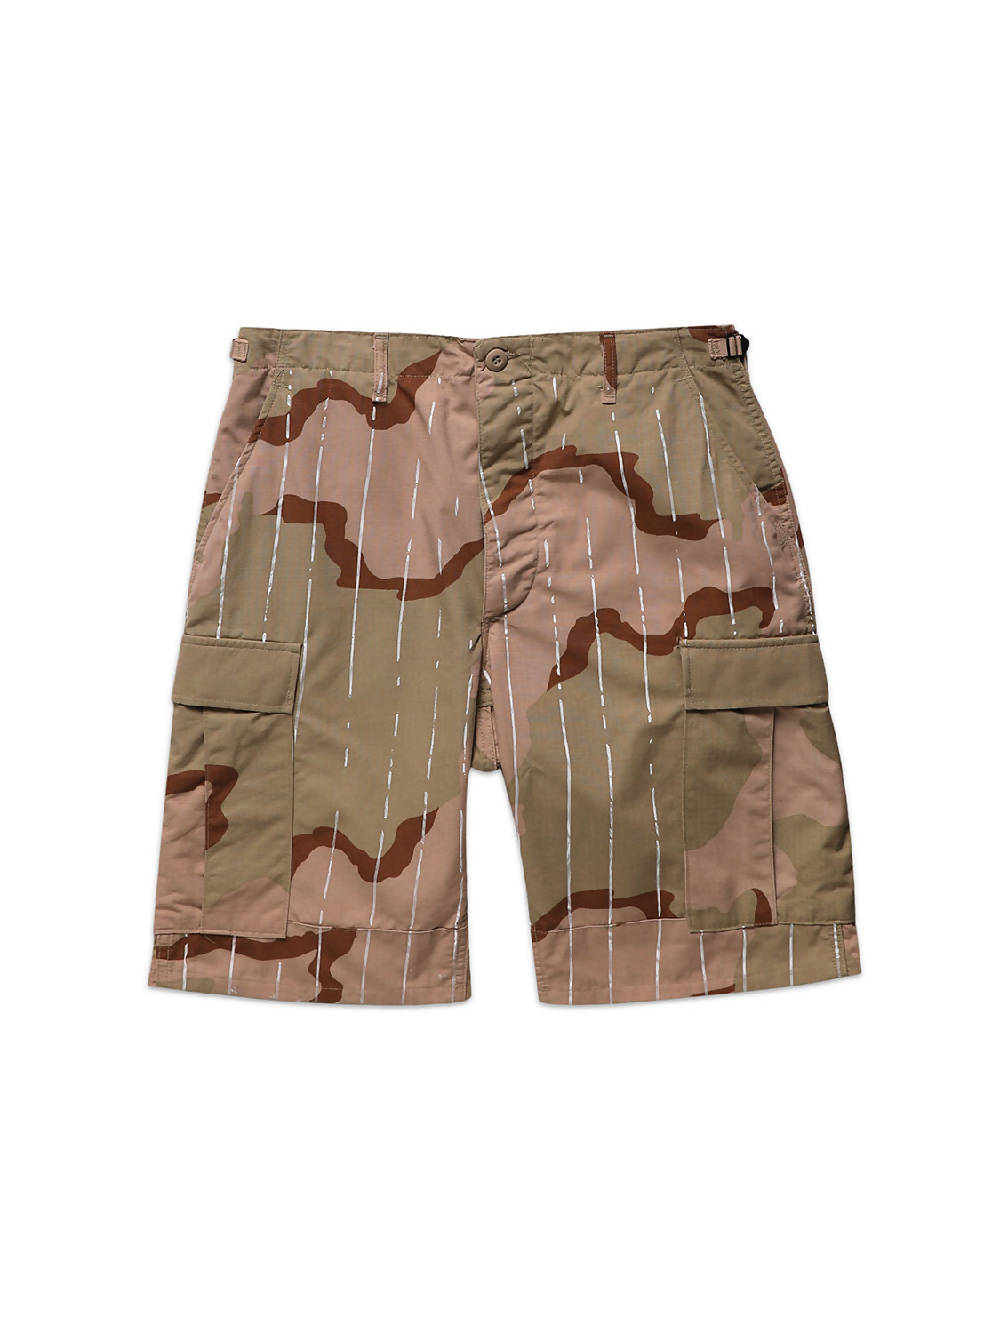 Myar Camo Ussrt90 Us Army Shorts